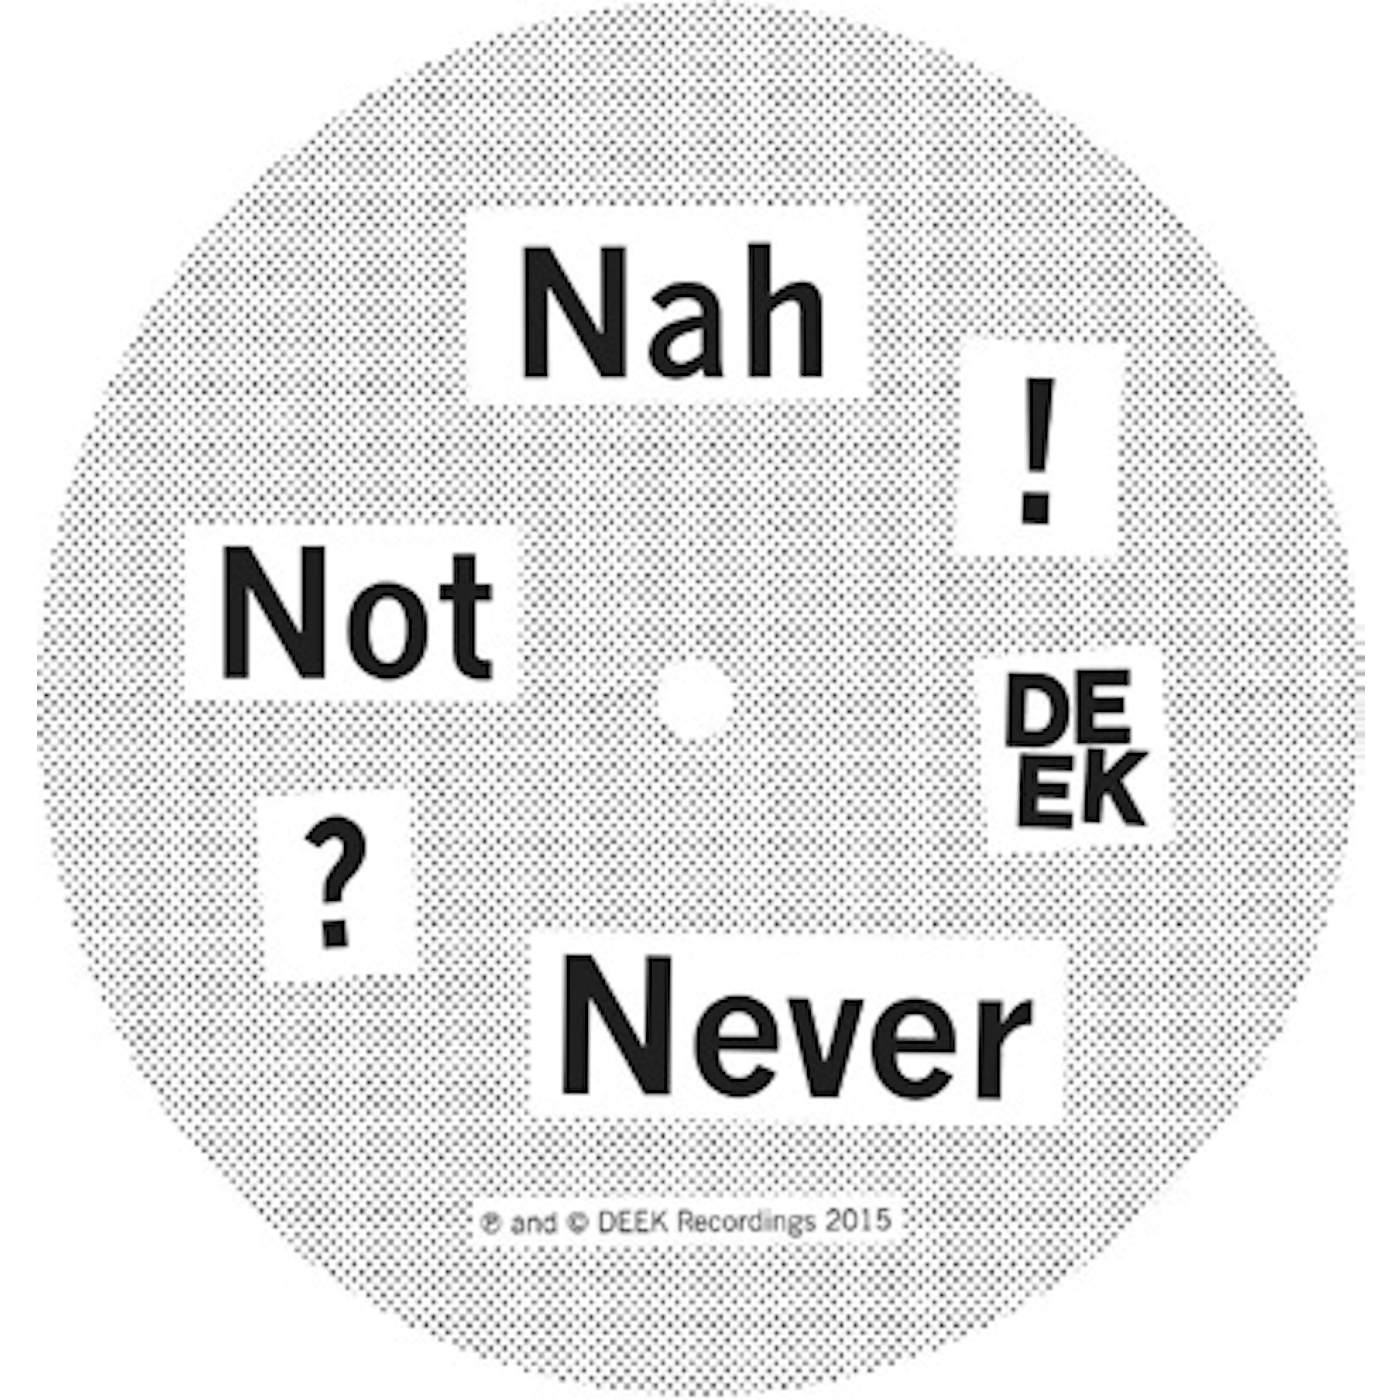 Don't Ask NAH NOT NEVER Vinyl Record